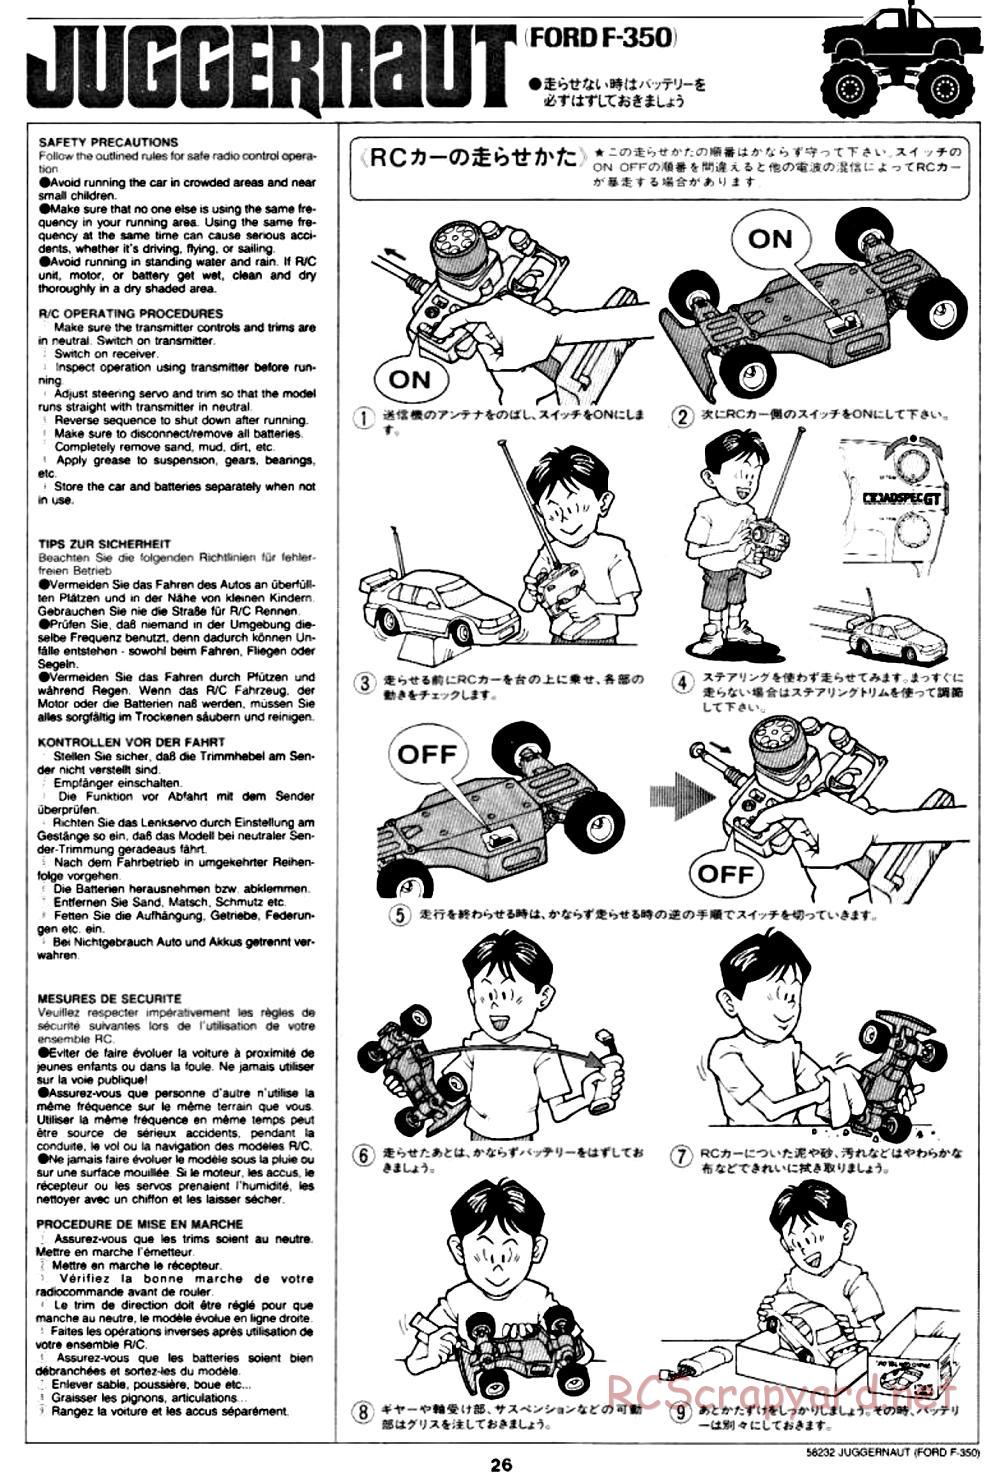 Tamiya - Juggernaut Chassis - Manual - Page 26